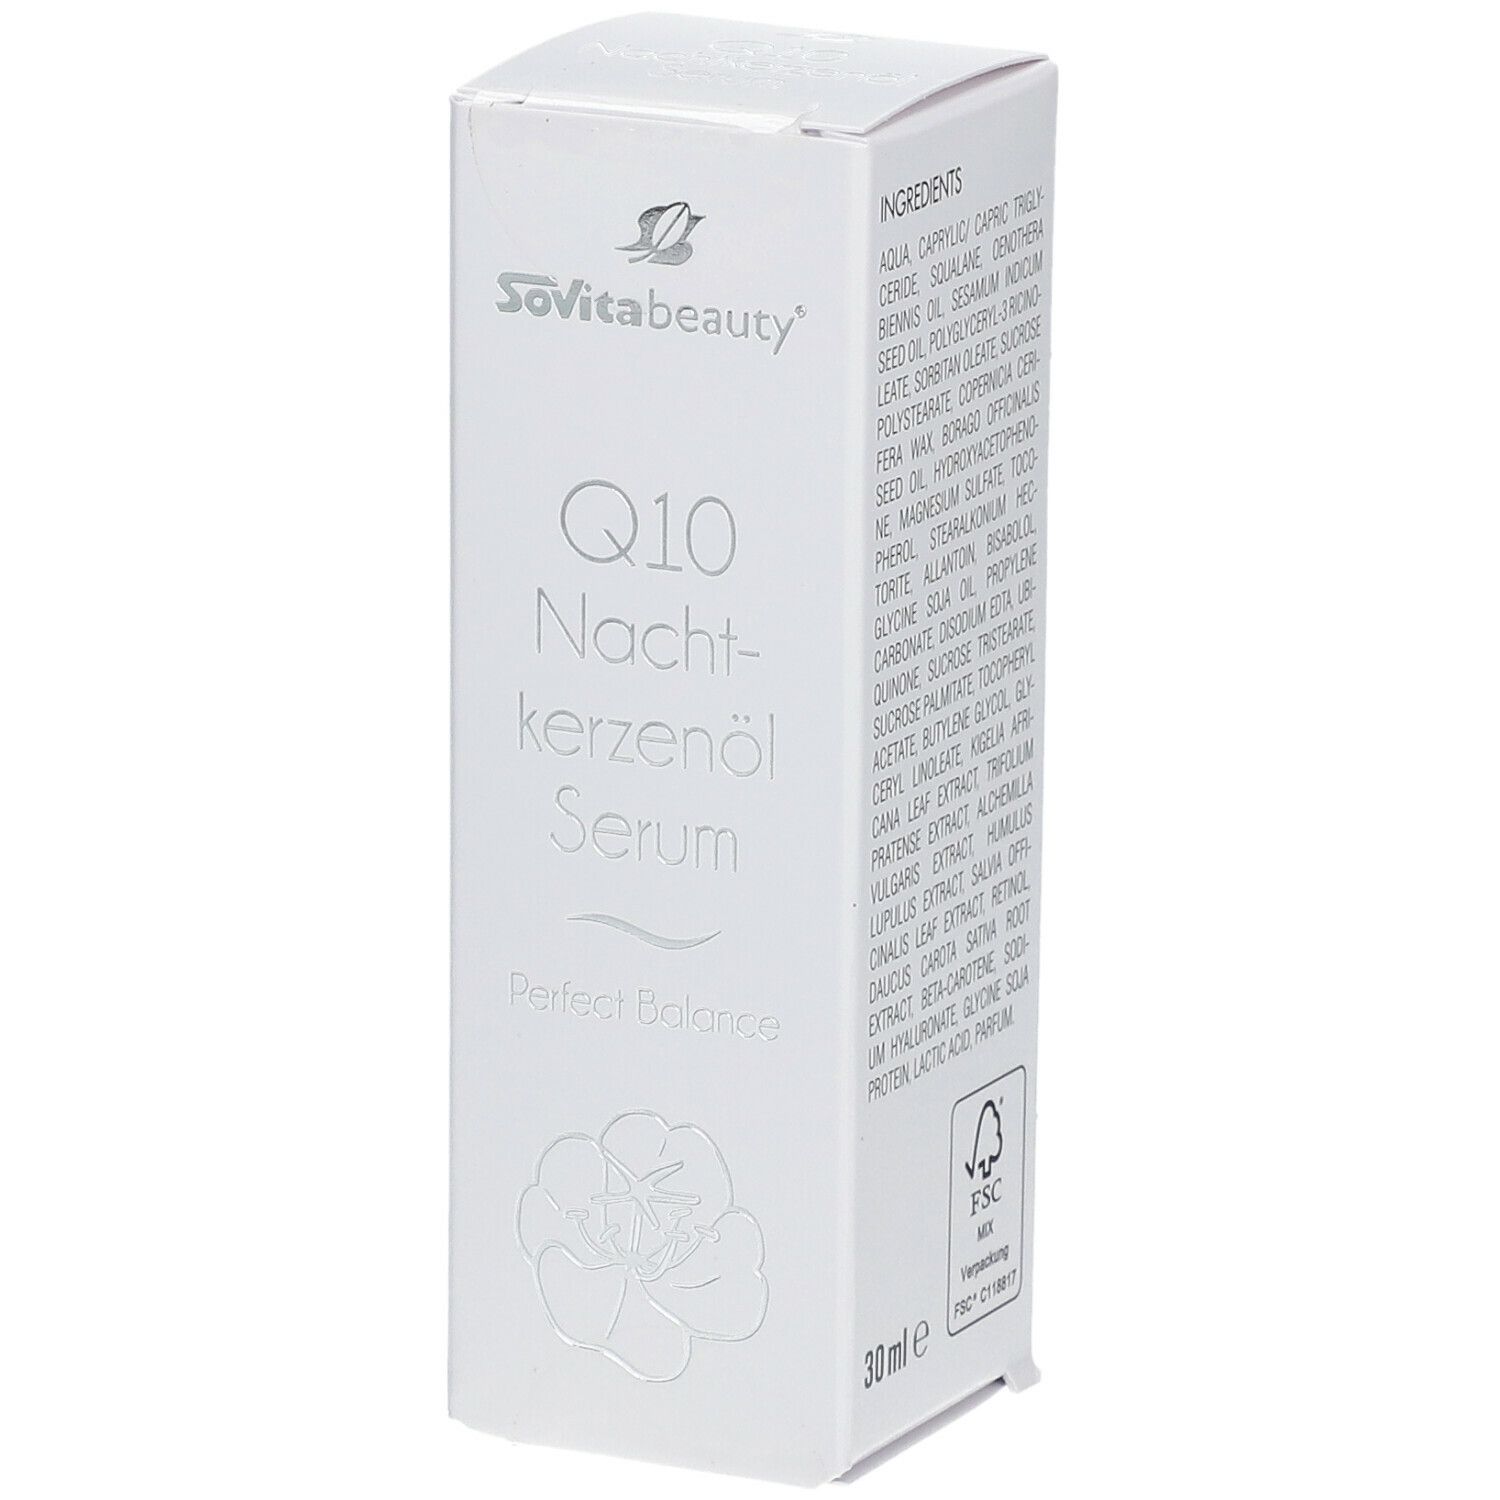 SoVitabeauty® Q10 Nachtkerzenöl Serum